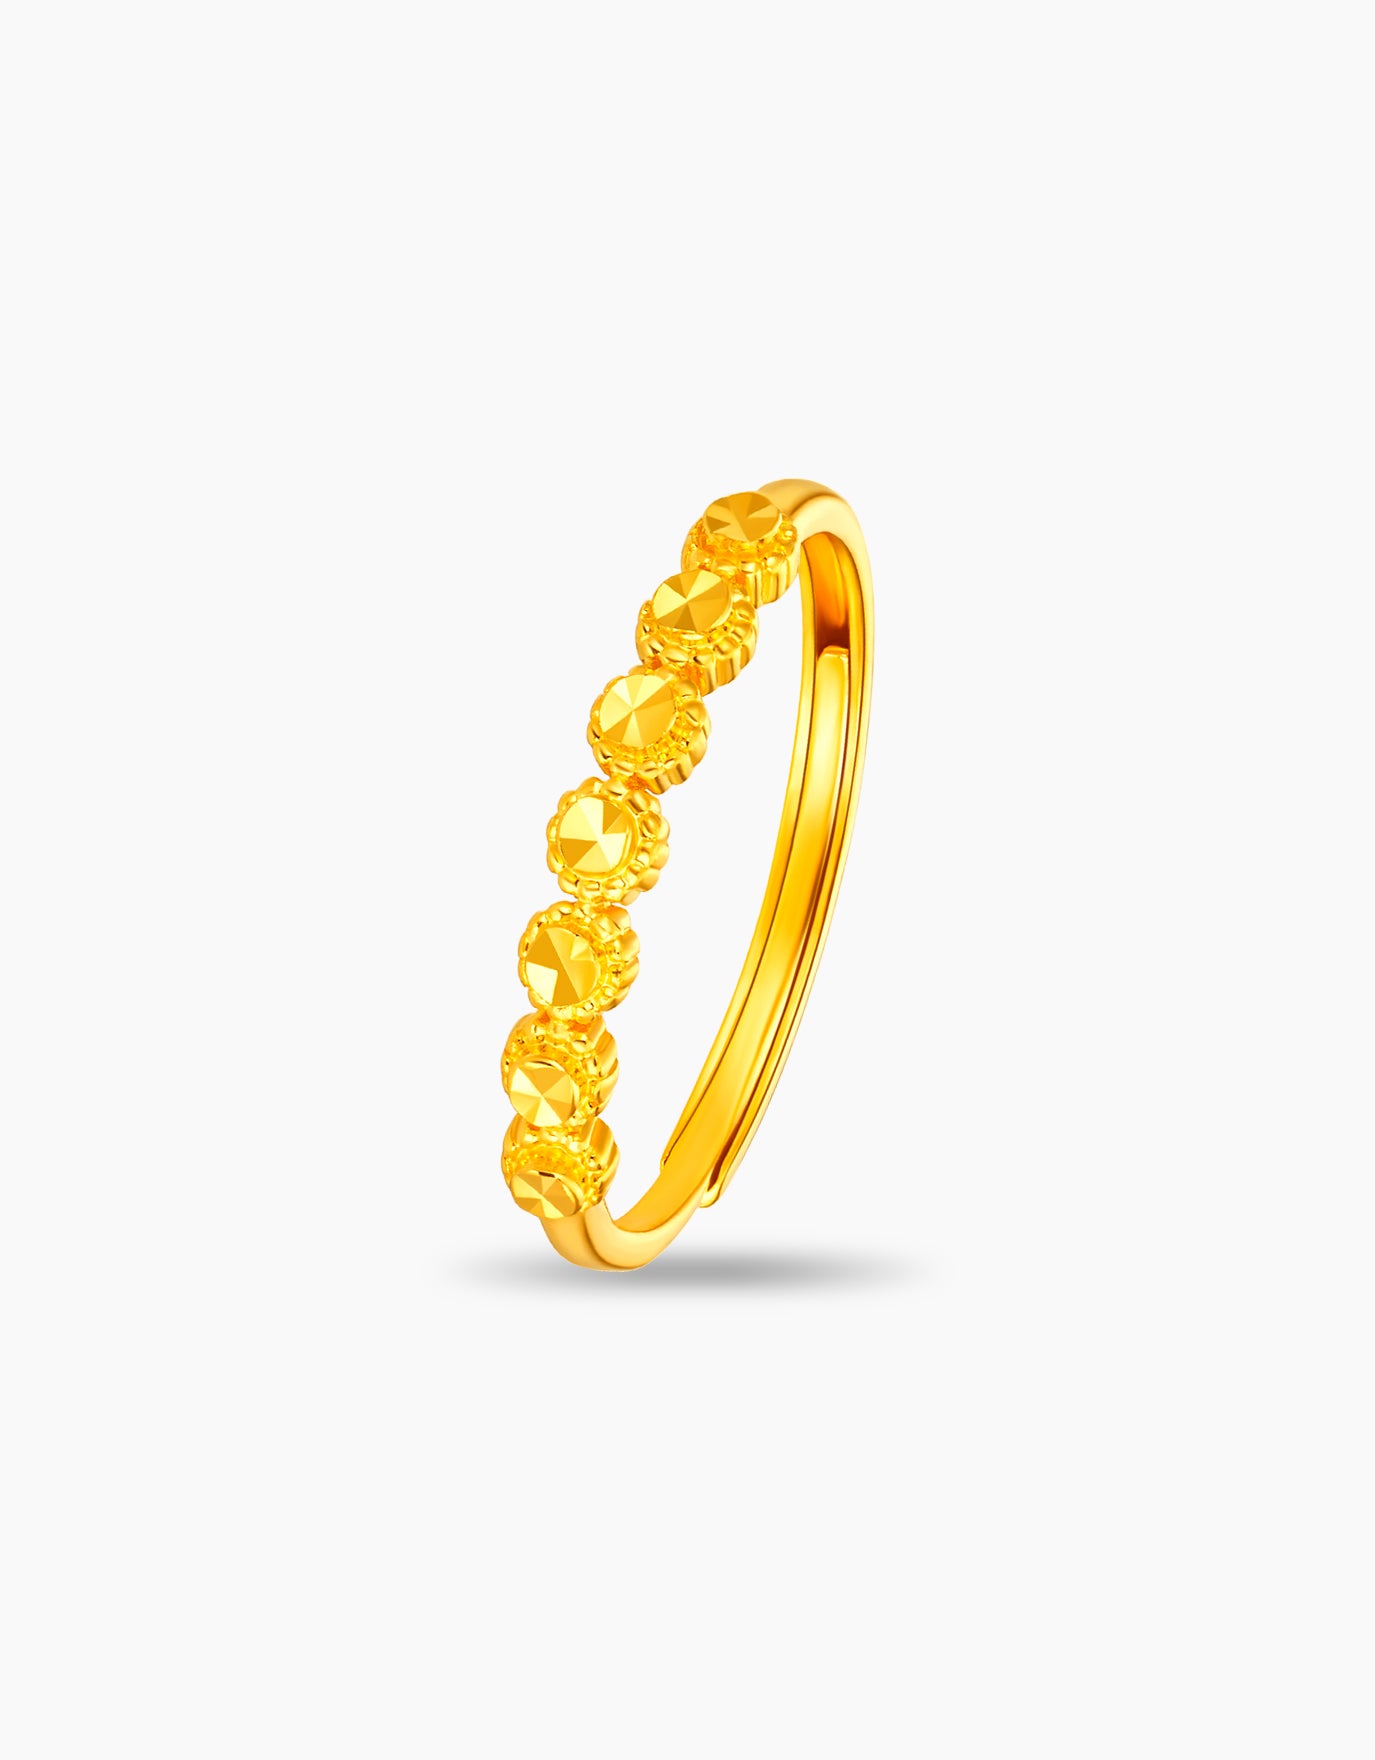 LVC 9IN Ketrina 999 Gold Ring